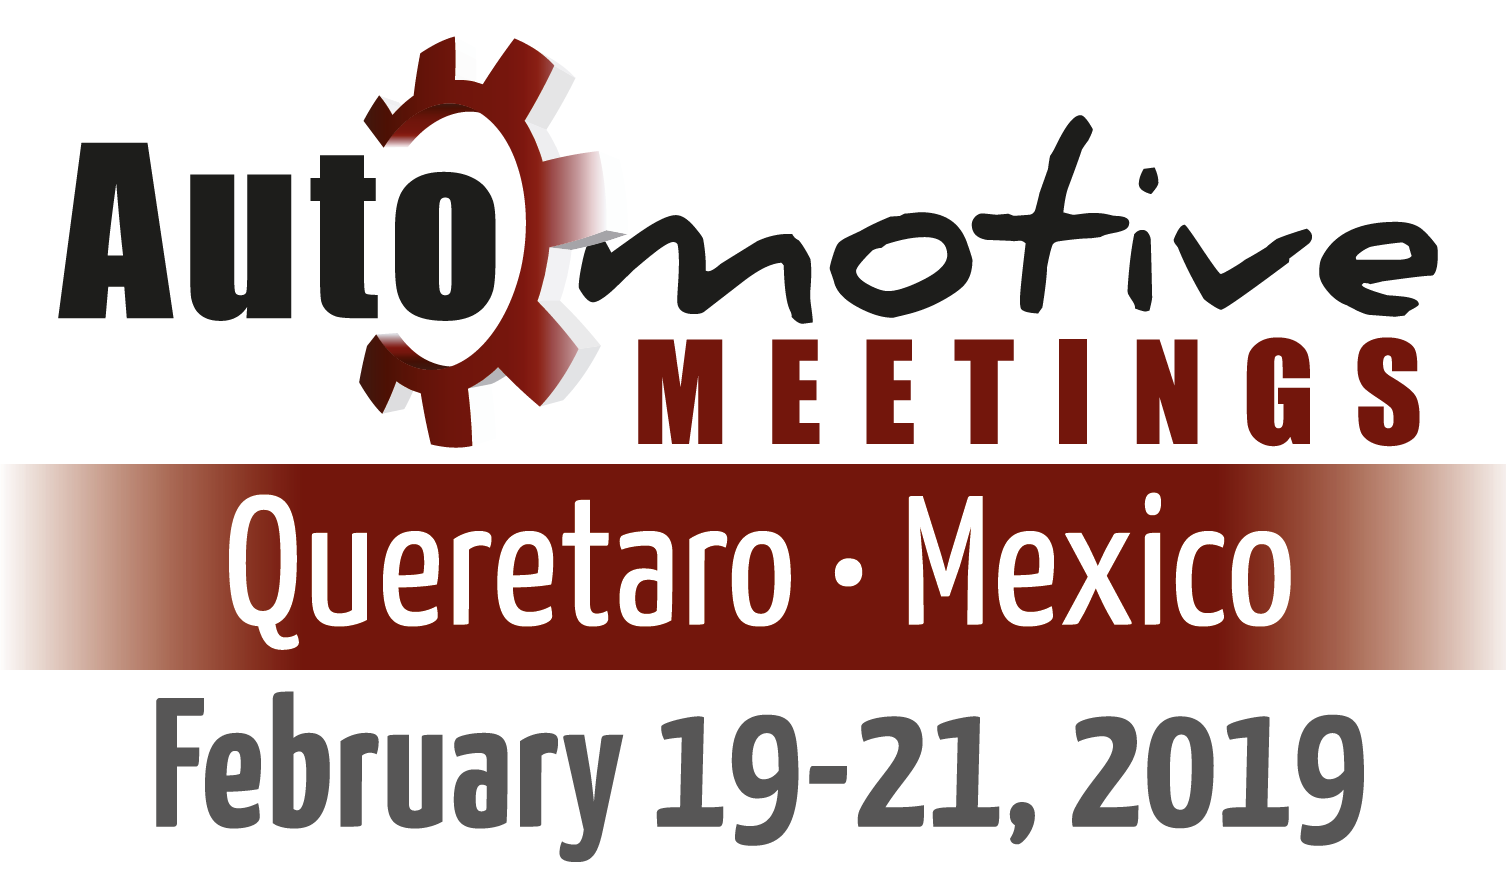 Visit TransAmerica at the Manufacturing Meetings in Queretaro, Mexico